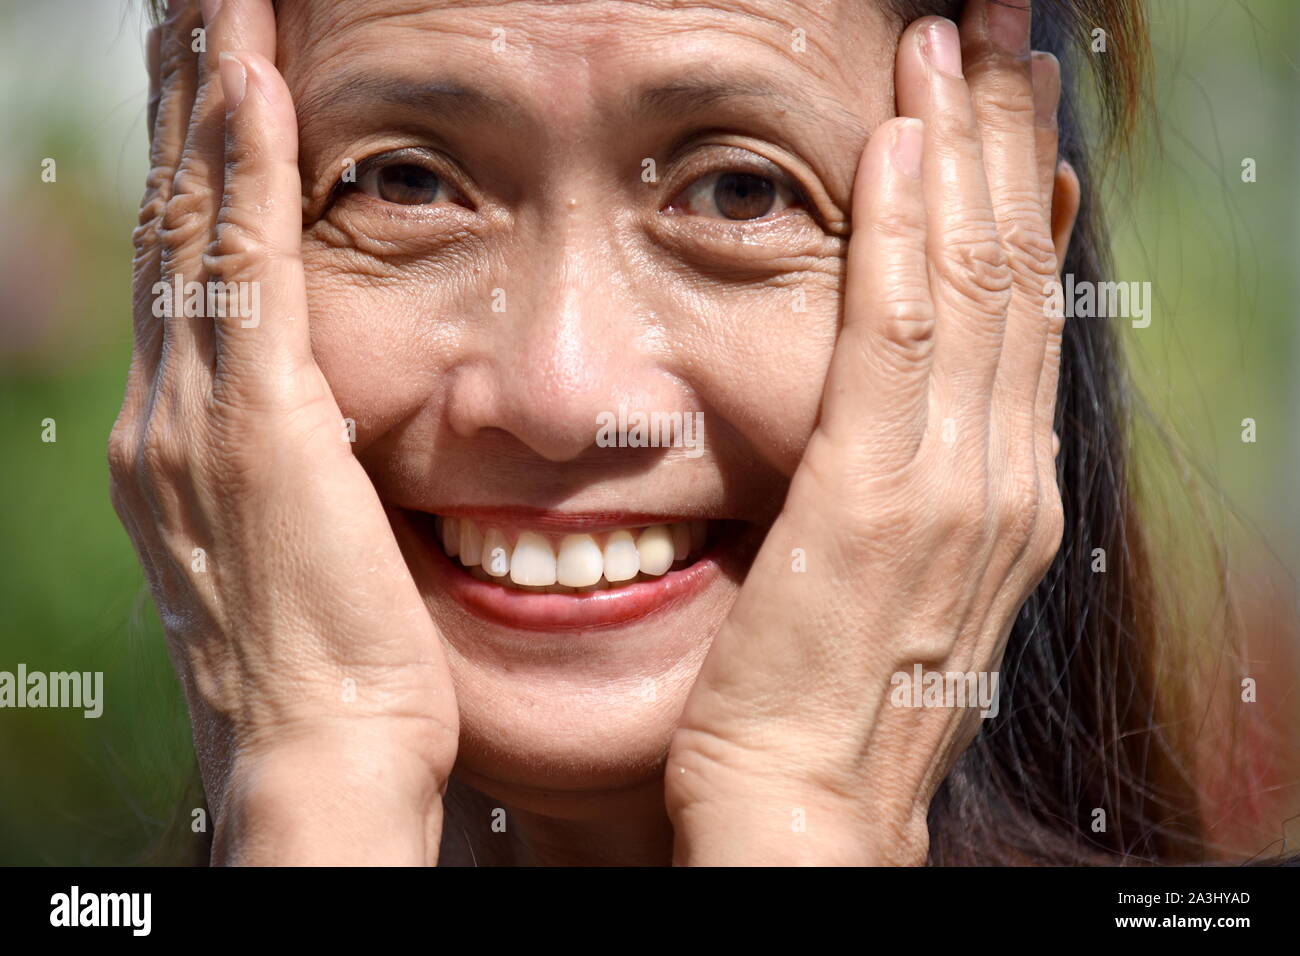 A Minority Female Senior And Happiness Stock Photo